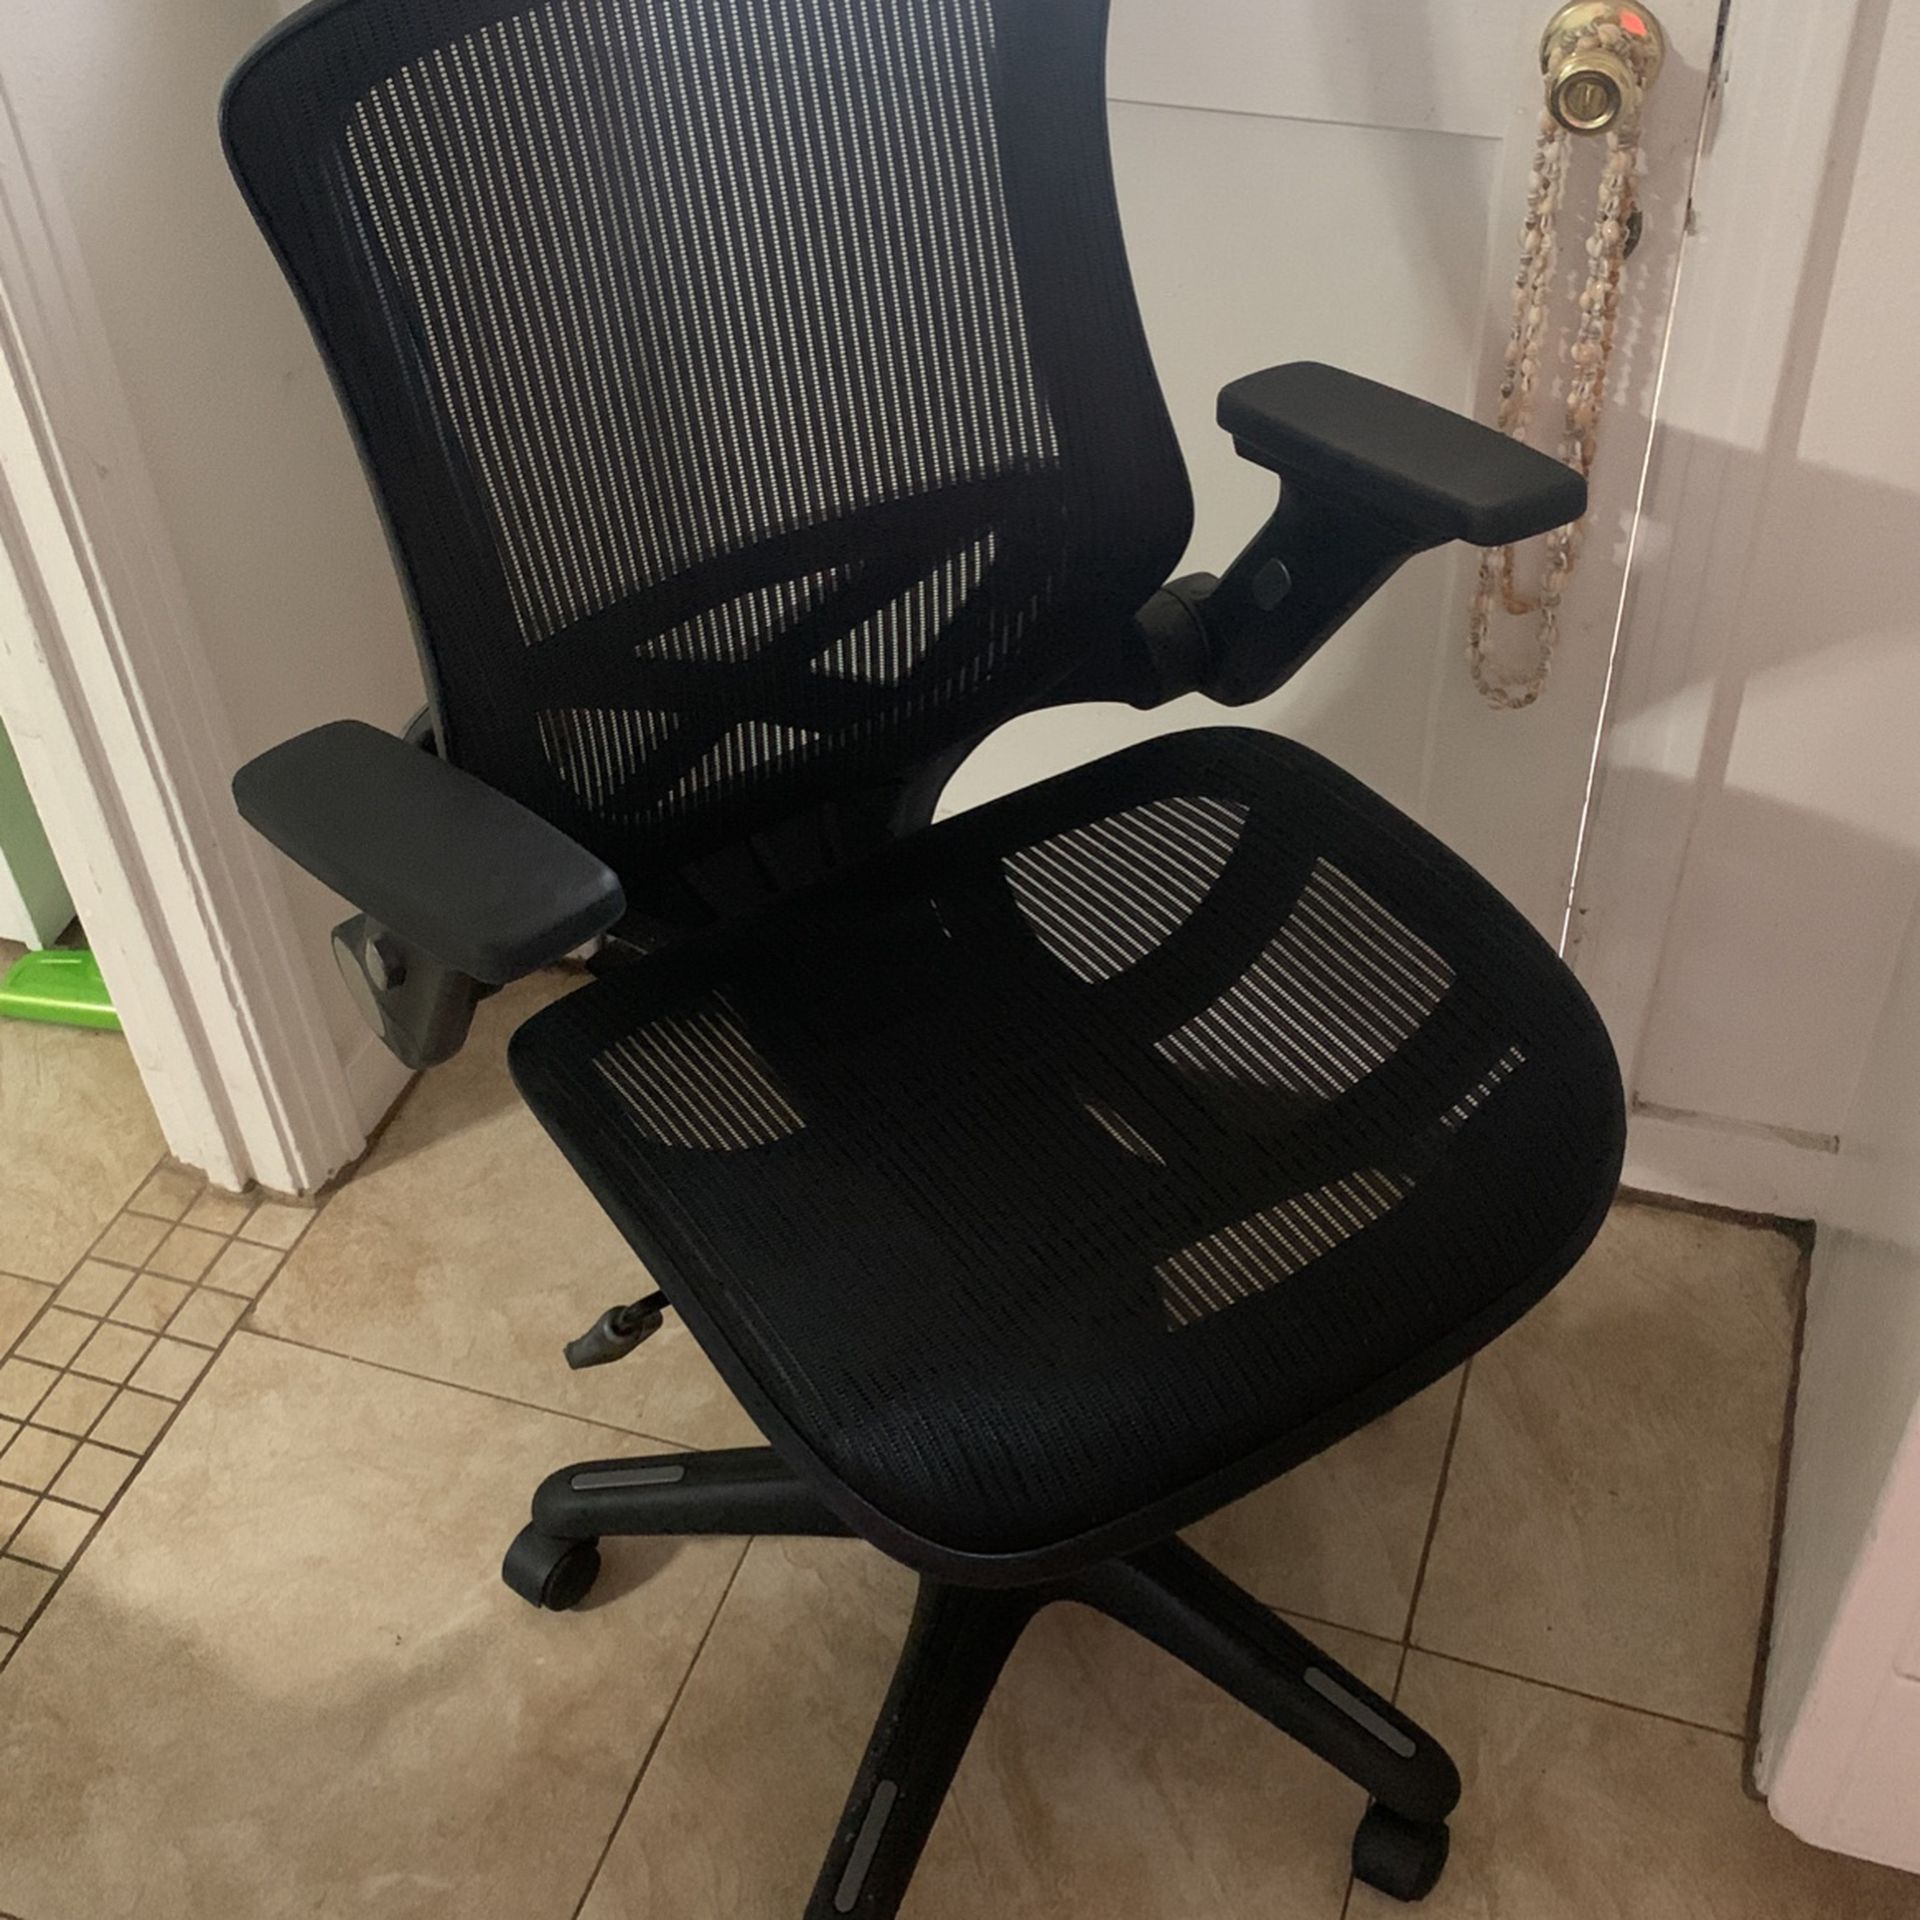 Office Desk Chair From Costco for Sale in Oakley, CA - OfferUp